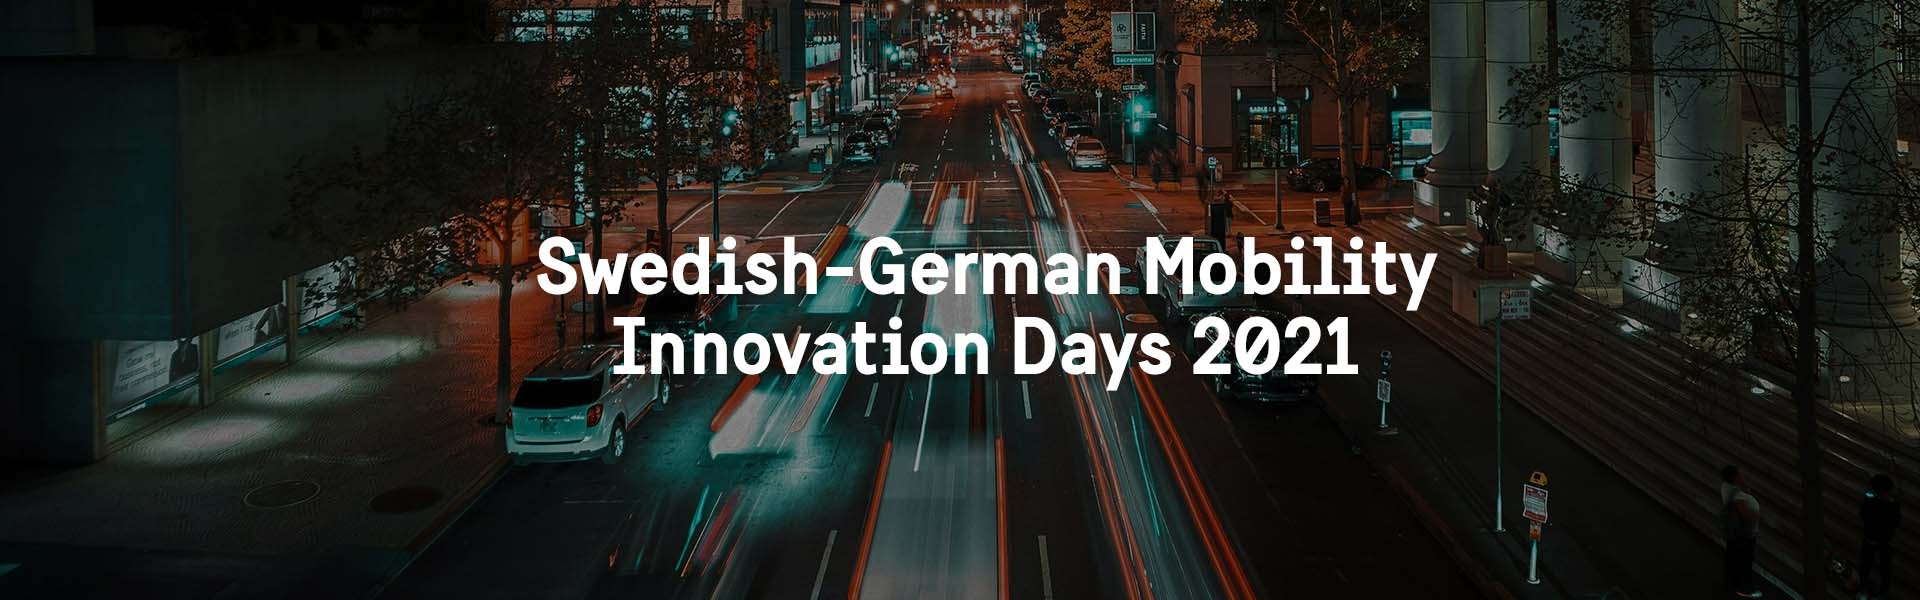 Header image for Swedish-German Mobility Innovation Days 2021